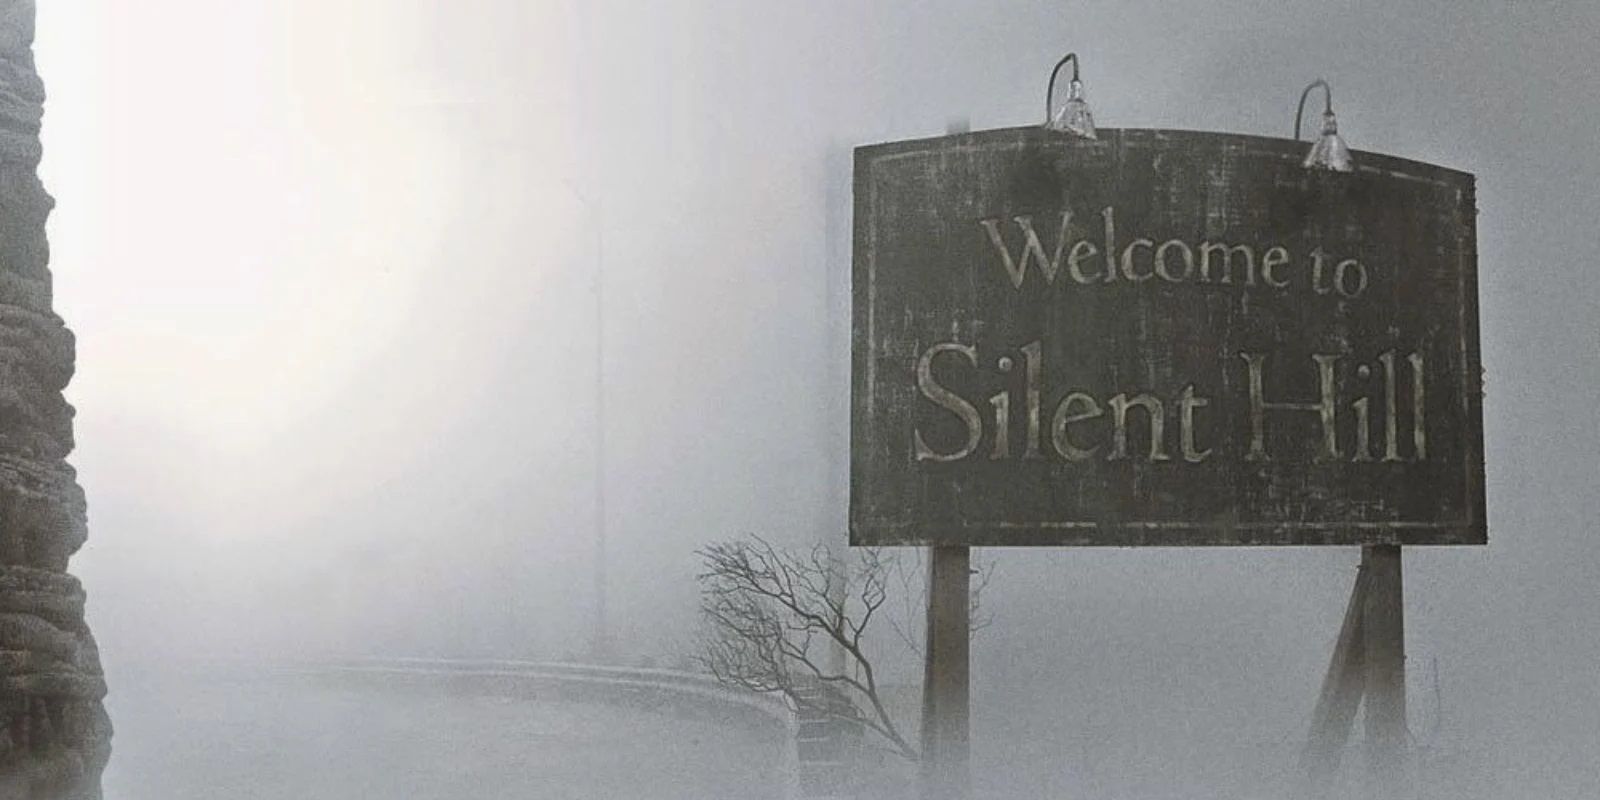 Silent Hill Remake Rumors Swirl After Artist Posts Cryptic Tweet